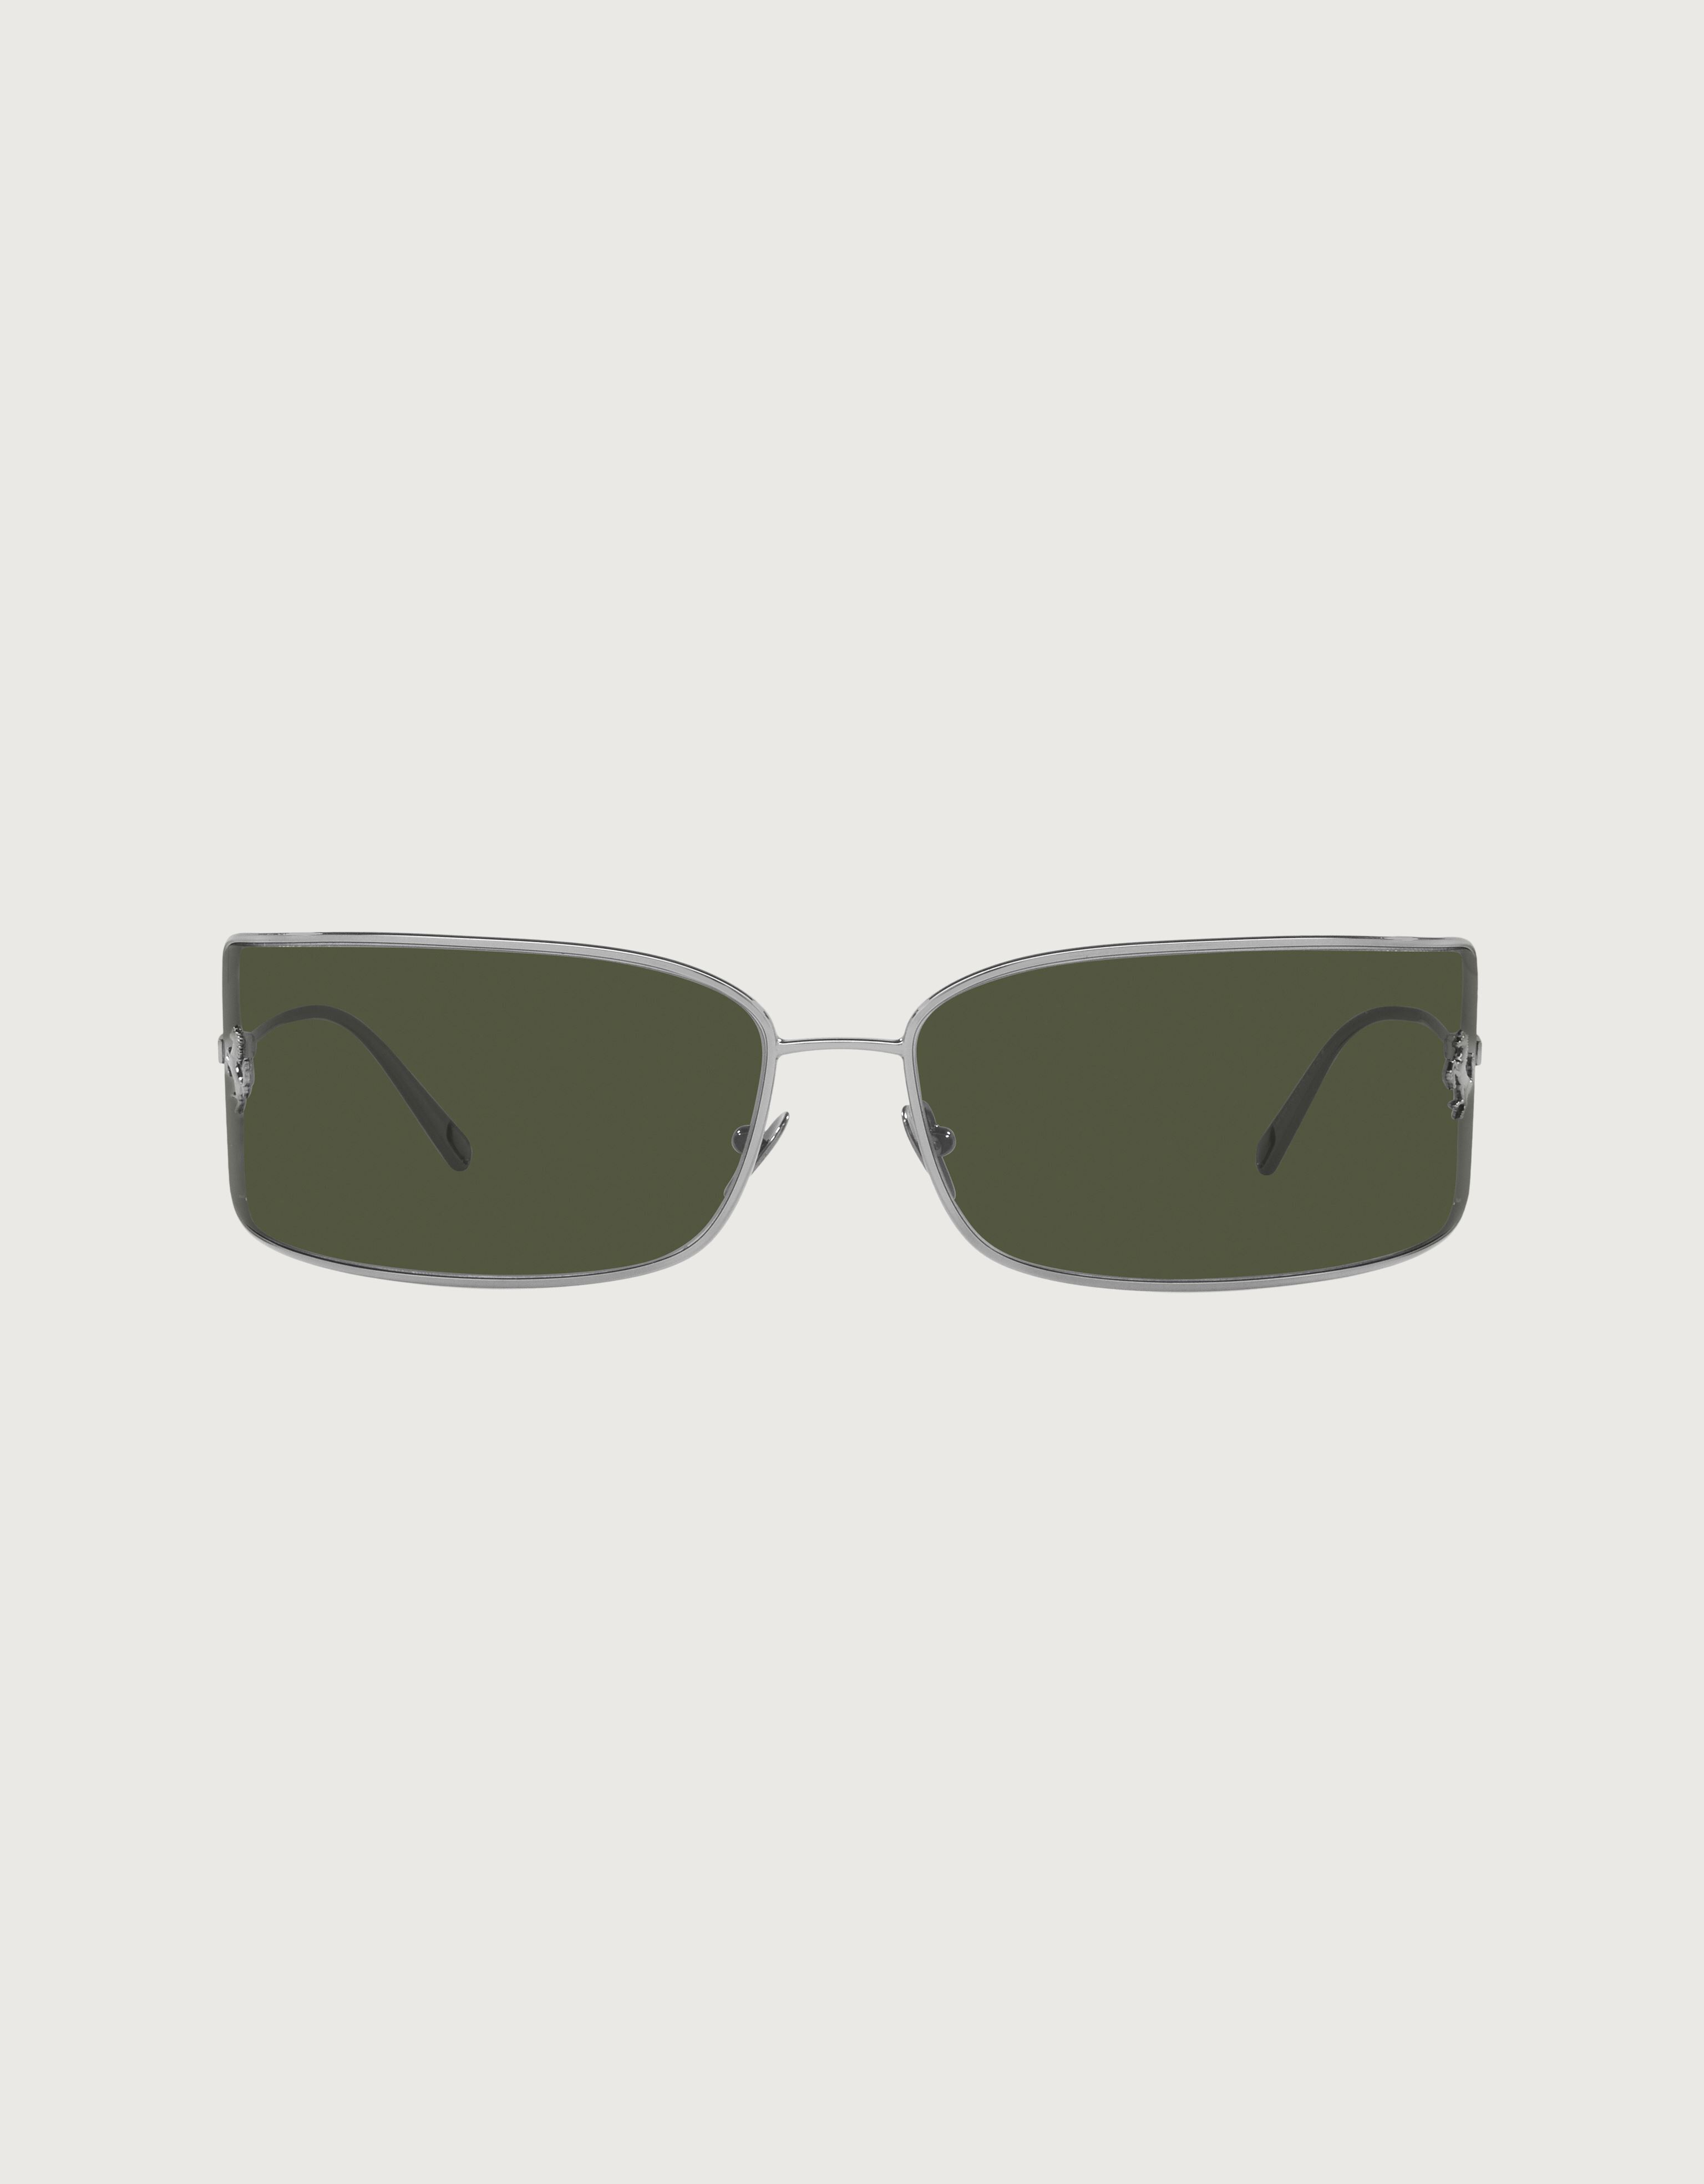 Ferrari Ferrari shield sunglasses with green lenses 金色 F0411f